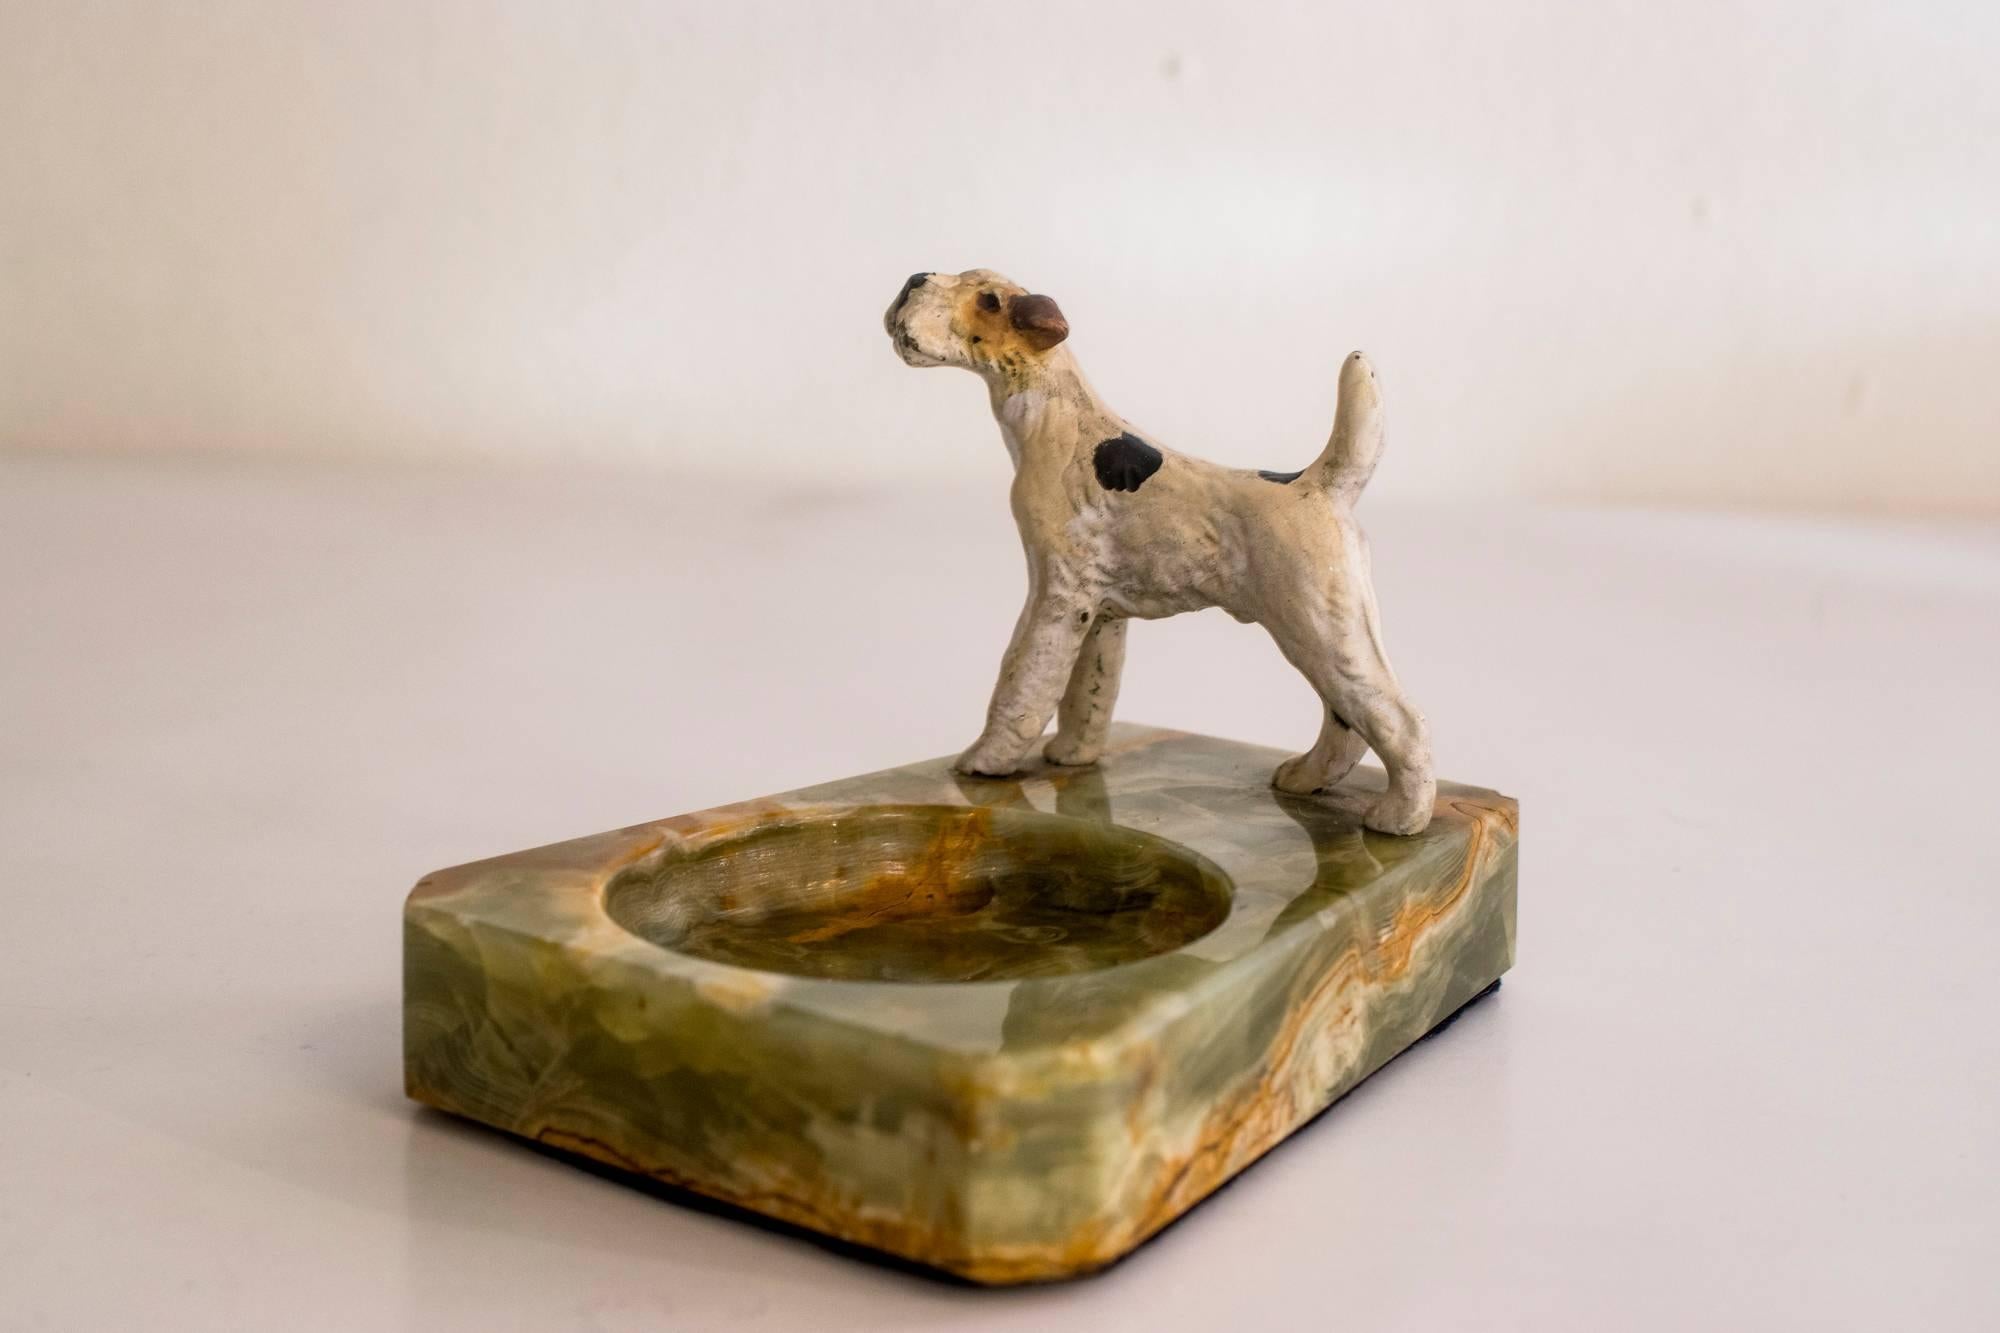 Vienna bronze dog figurine with marble ashtray
Original condition.